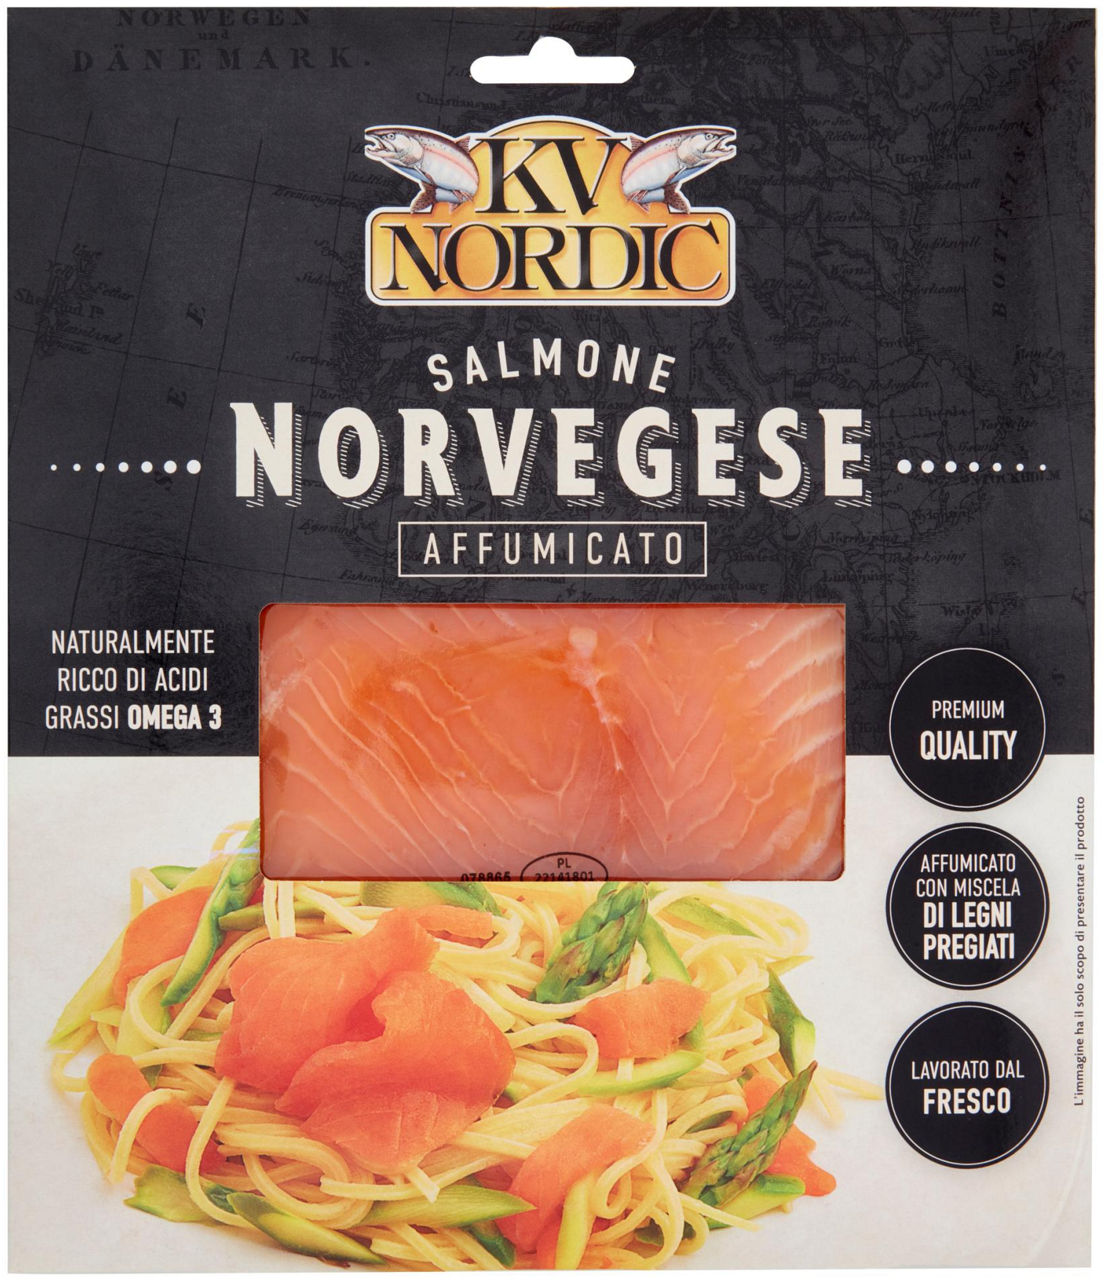 Salmone norvegese affumicato gr 100 - 0